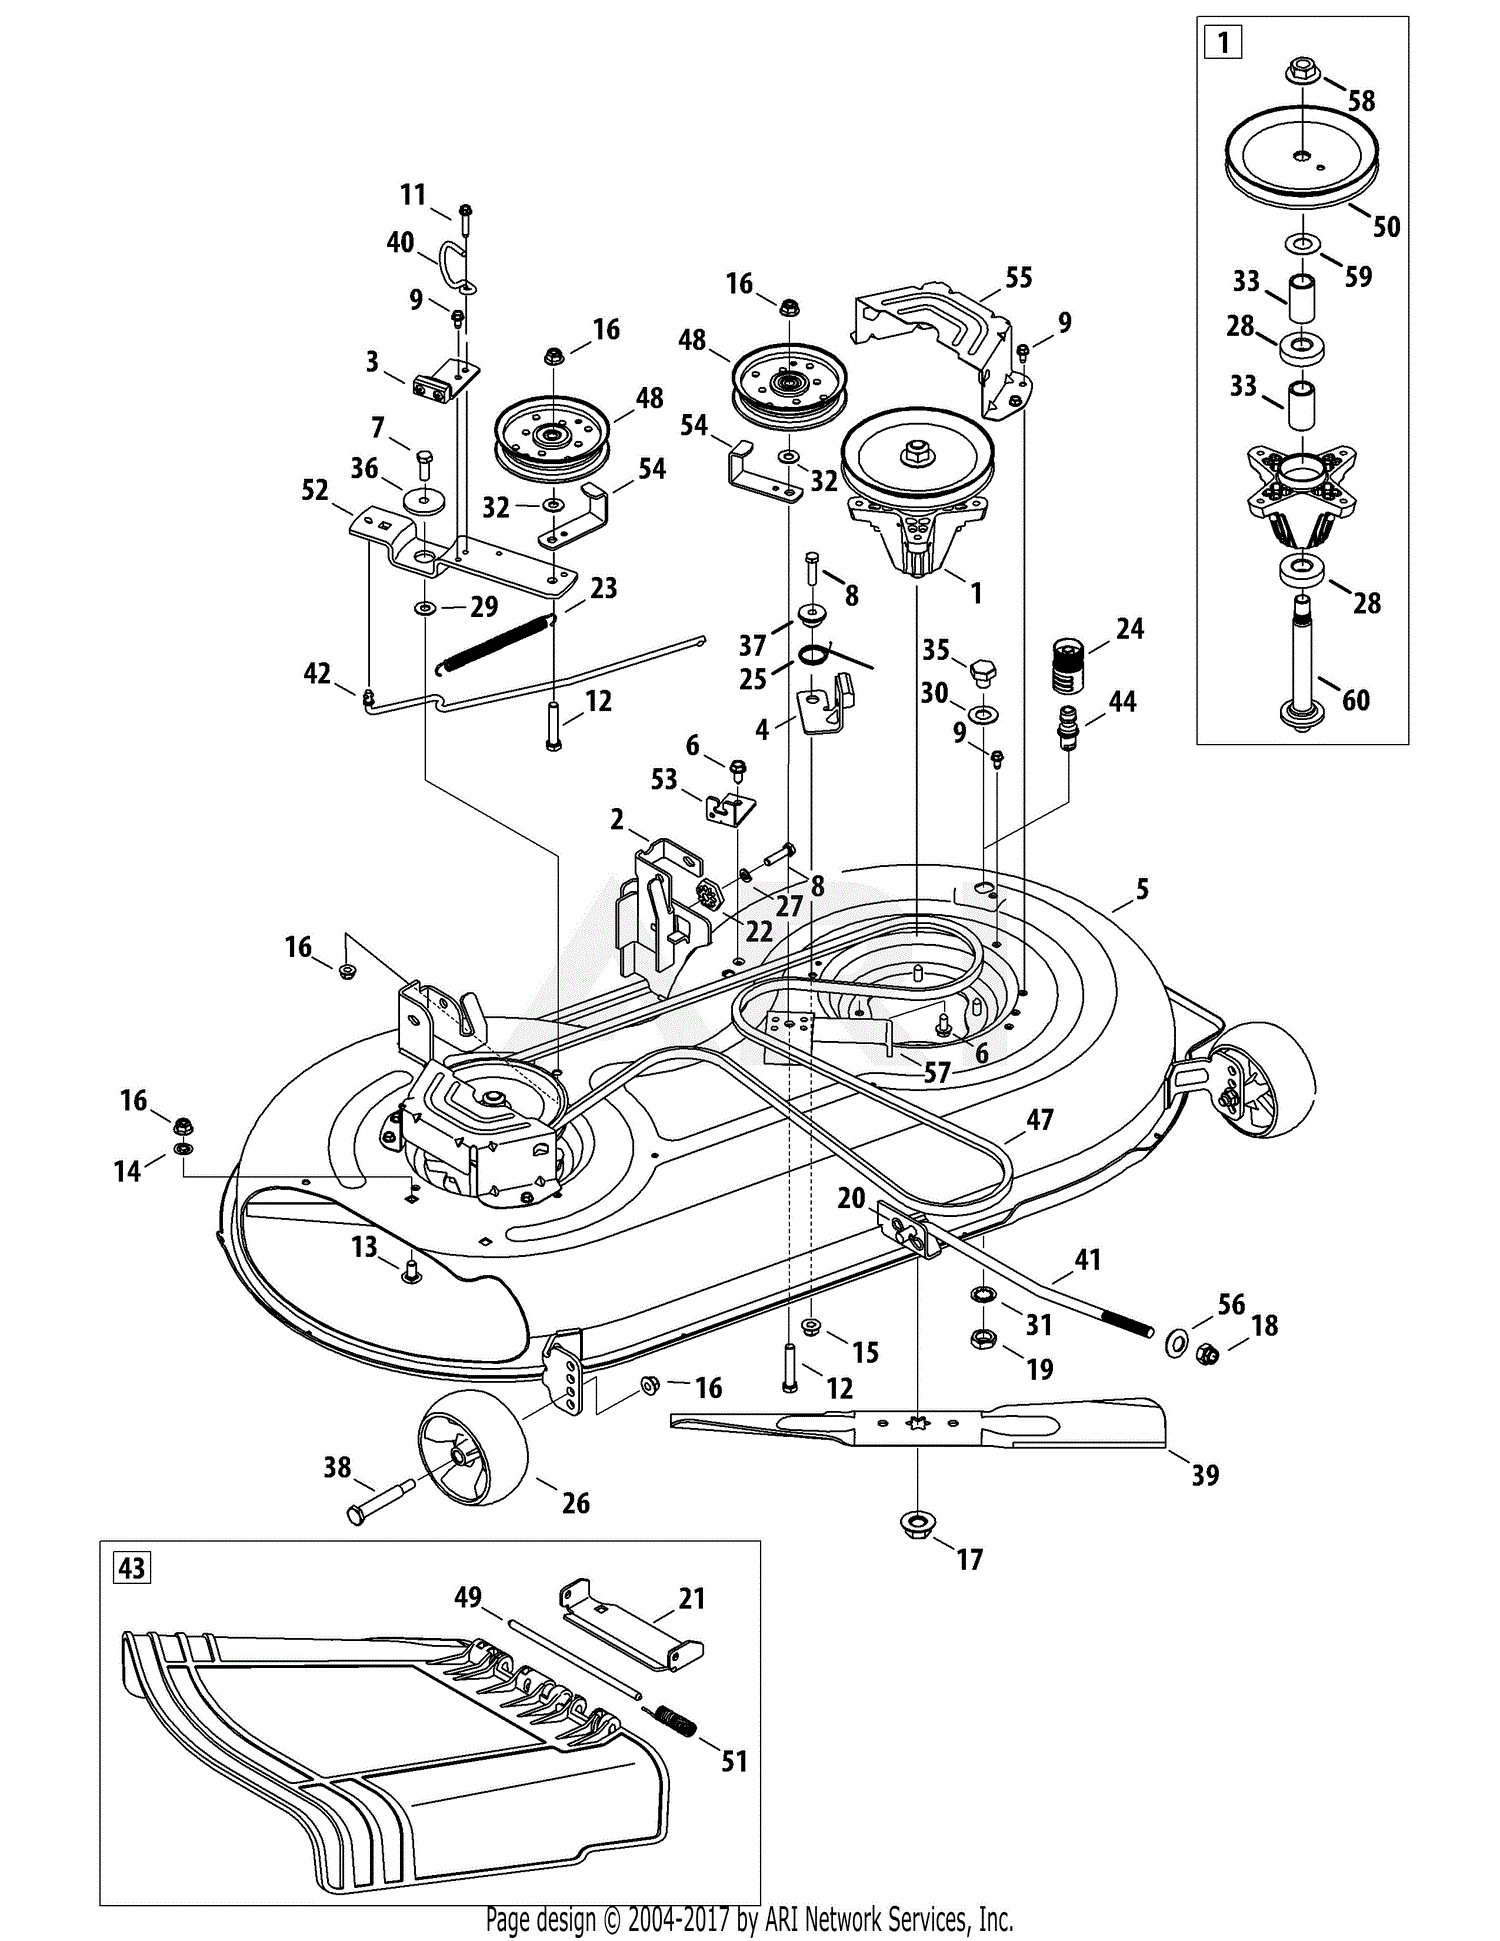 35 Scotts Riding Mower Parts Diagram - Wiring Diagram List